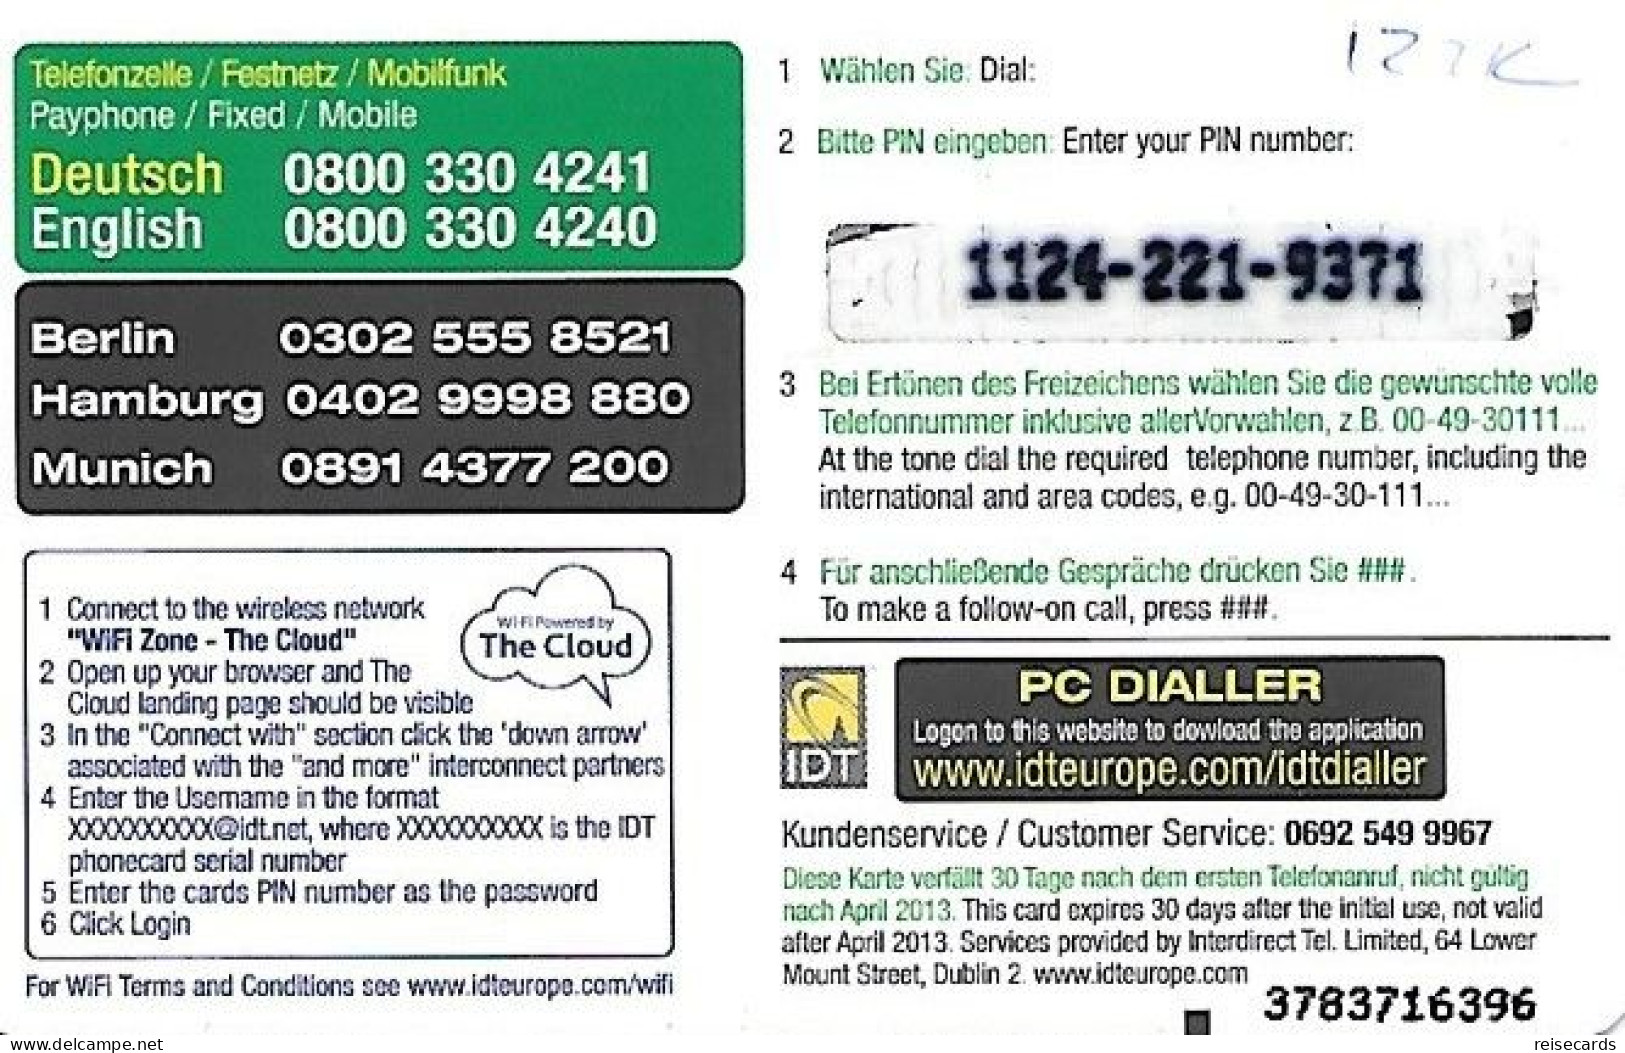 Germany: Prepaid IDT Top Card 04.13 - Cellulari, Carte Prepagate E Ricariche